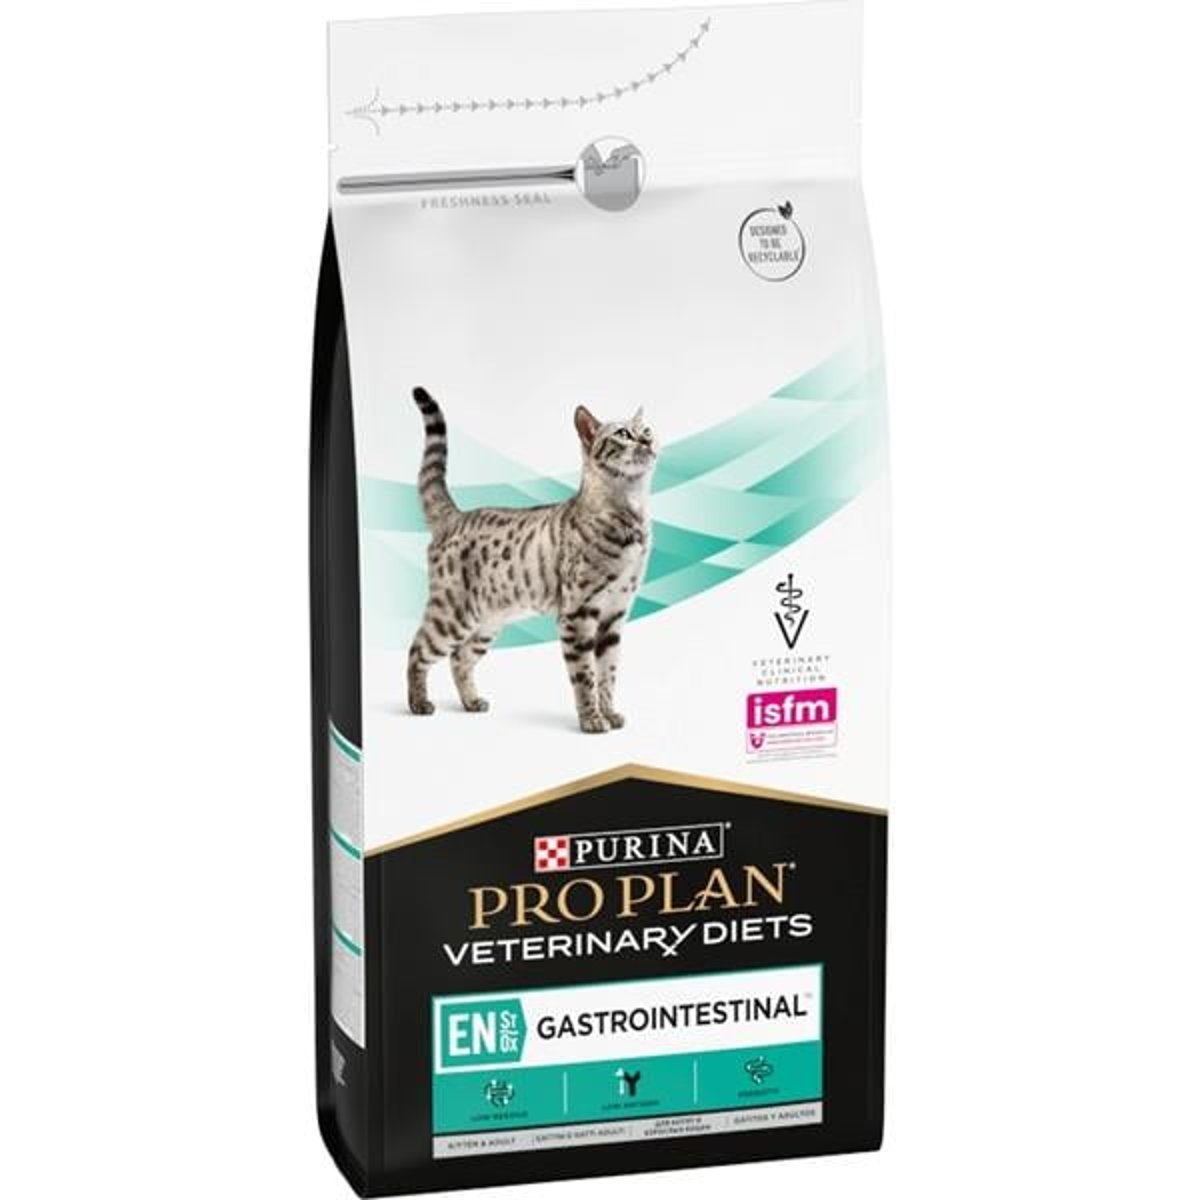 Pro Plan Veterinary Diets Gastrointestinal krmivo pro koťata a dospělé kočky